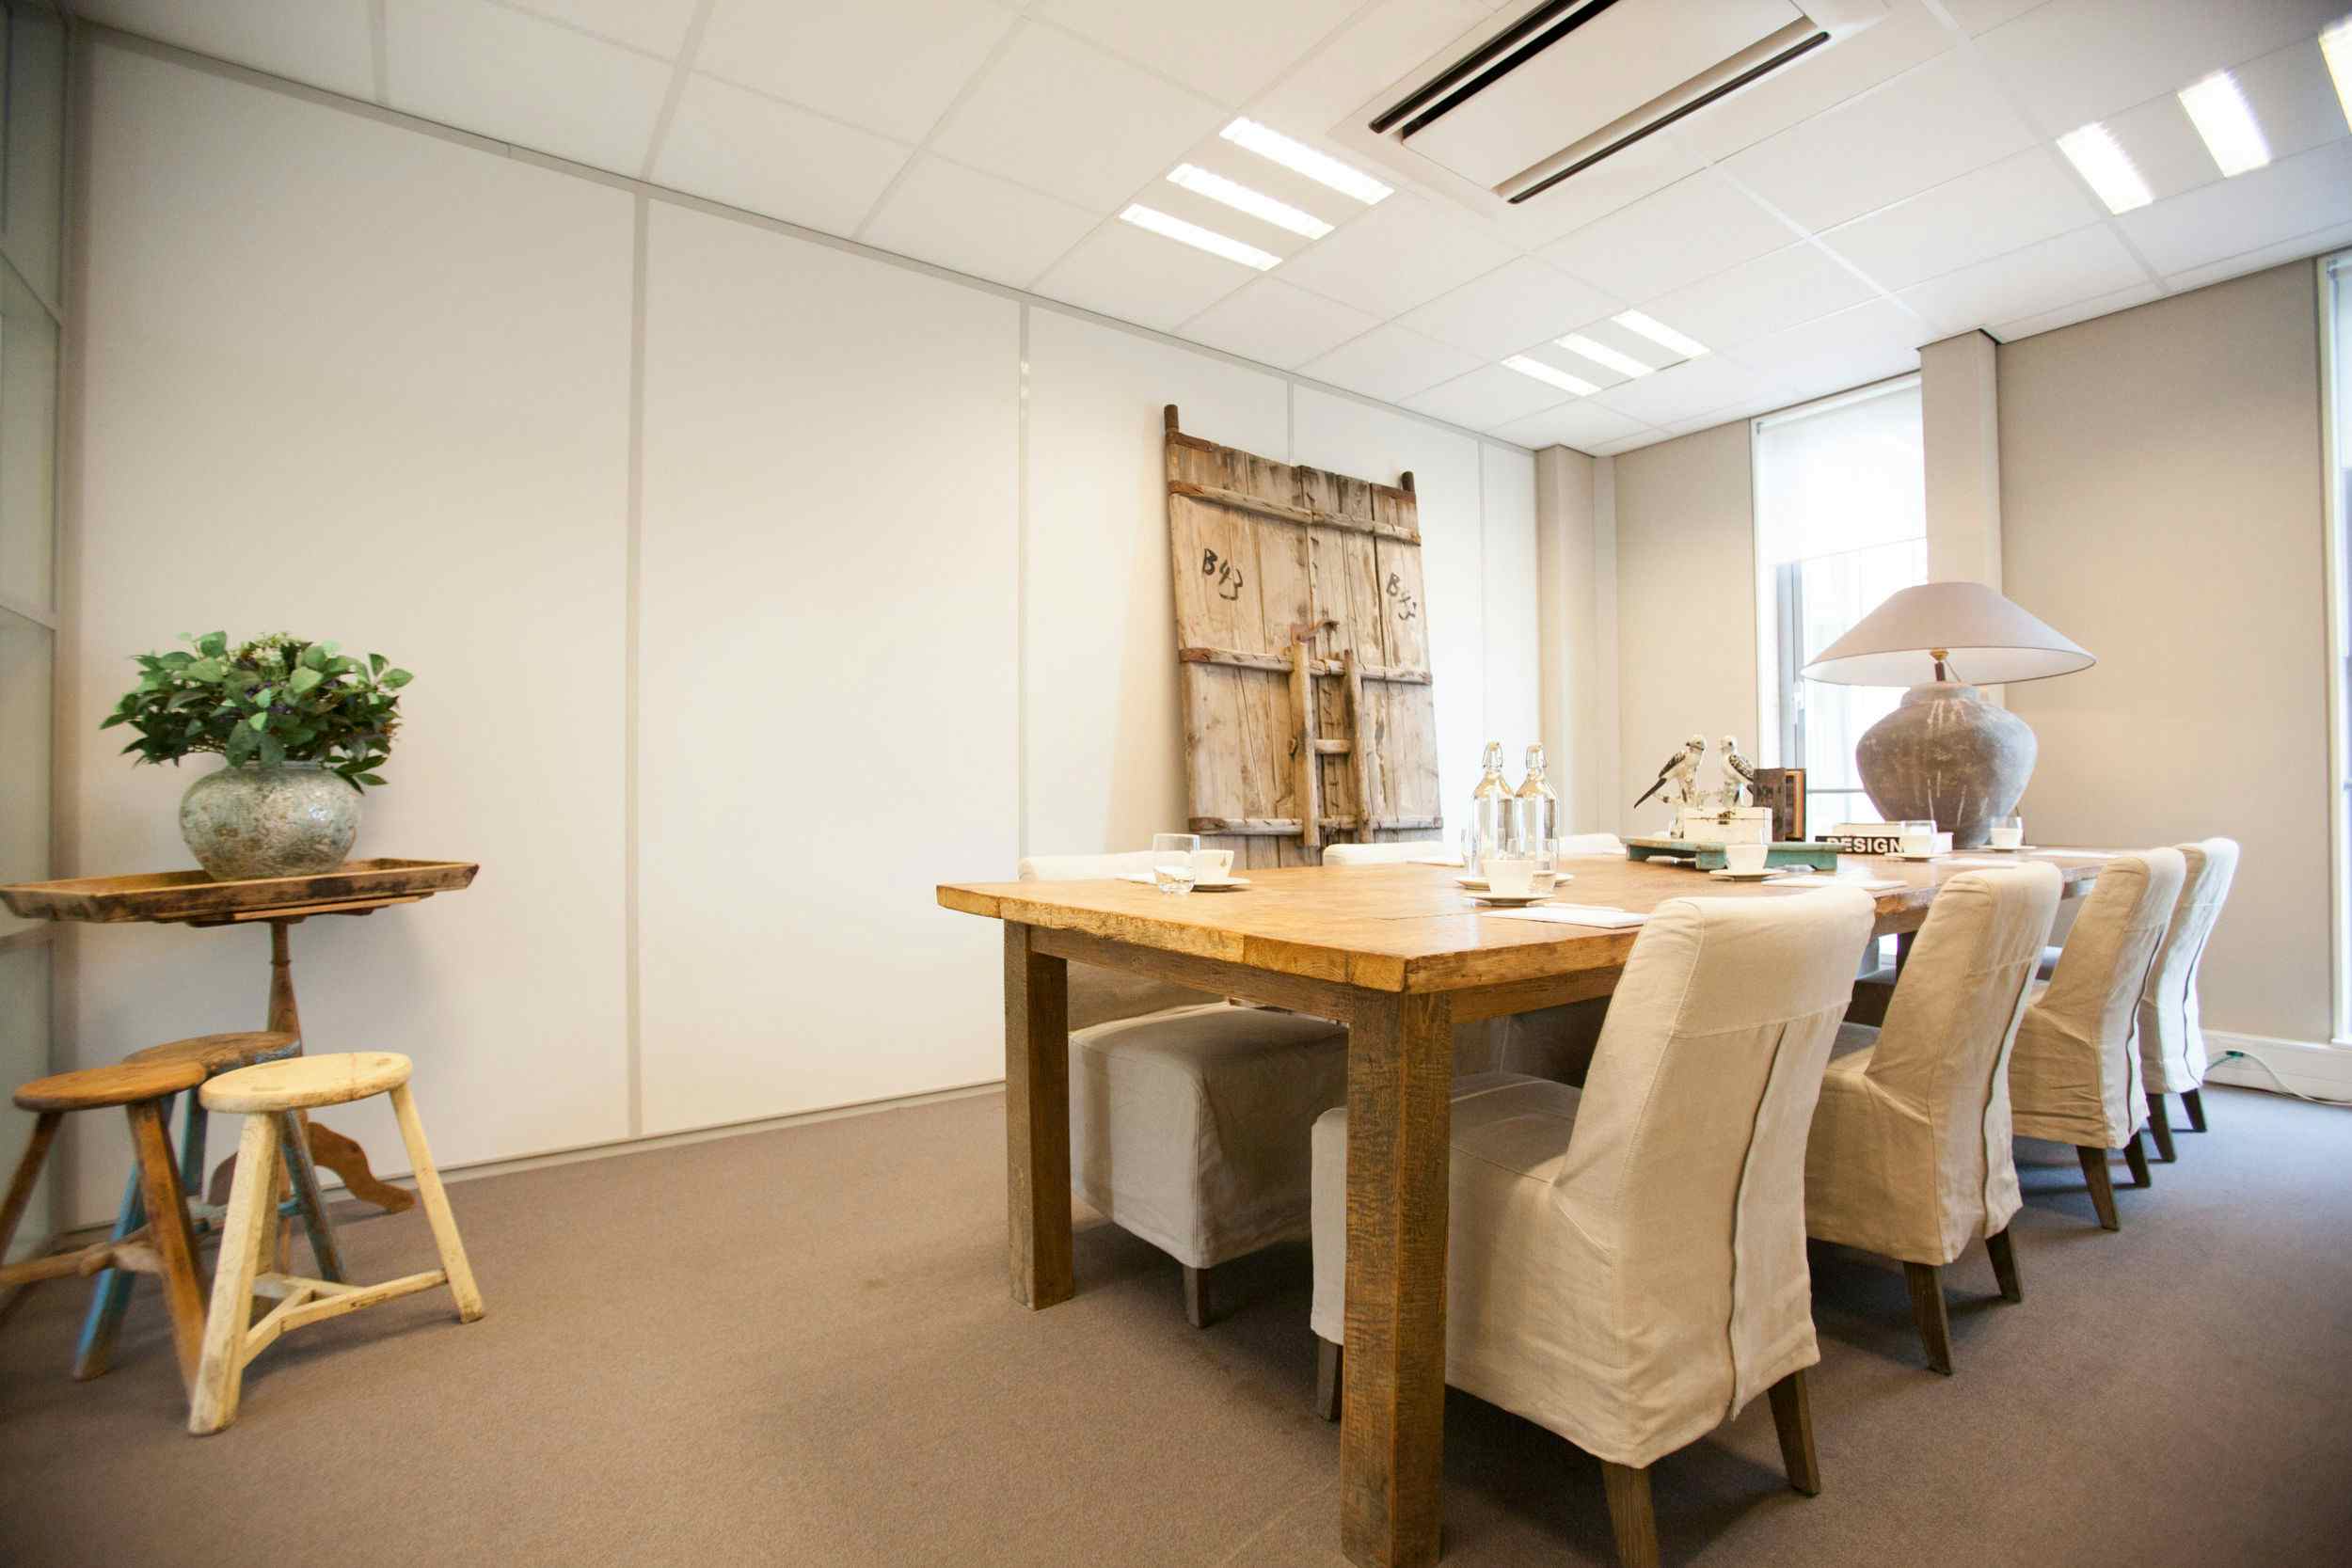 Neude, Offices For You Utrecht